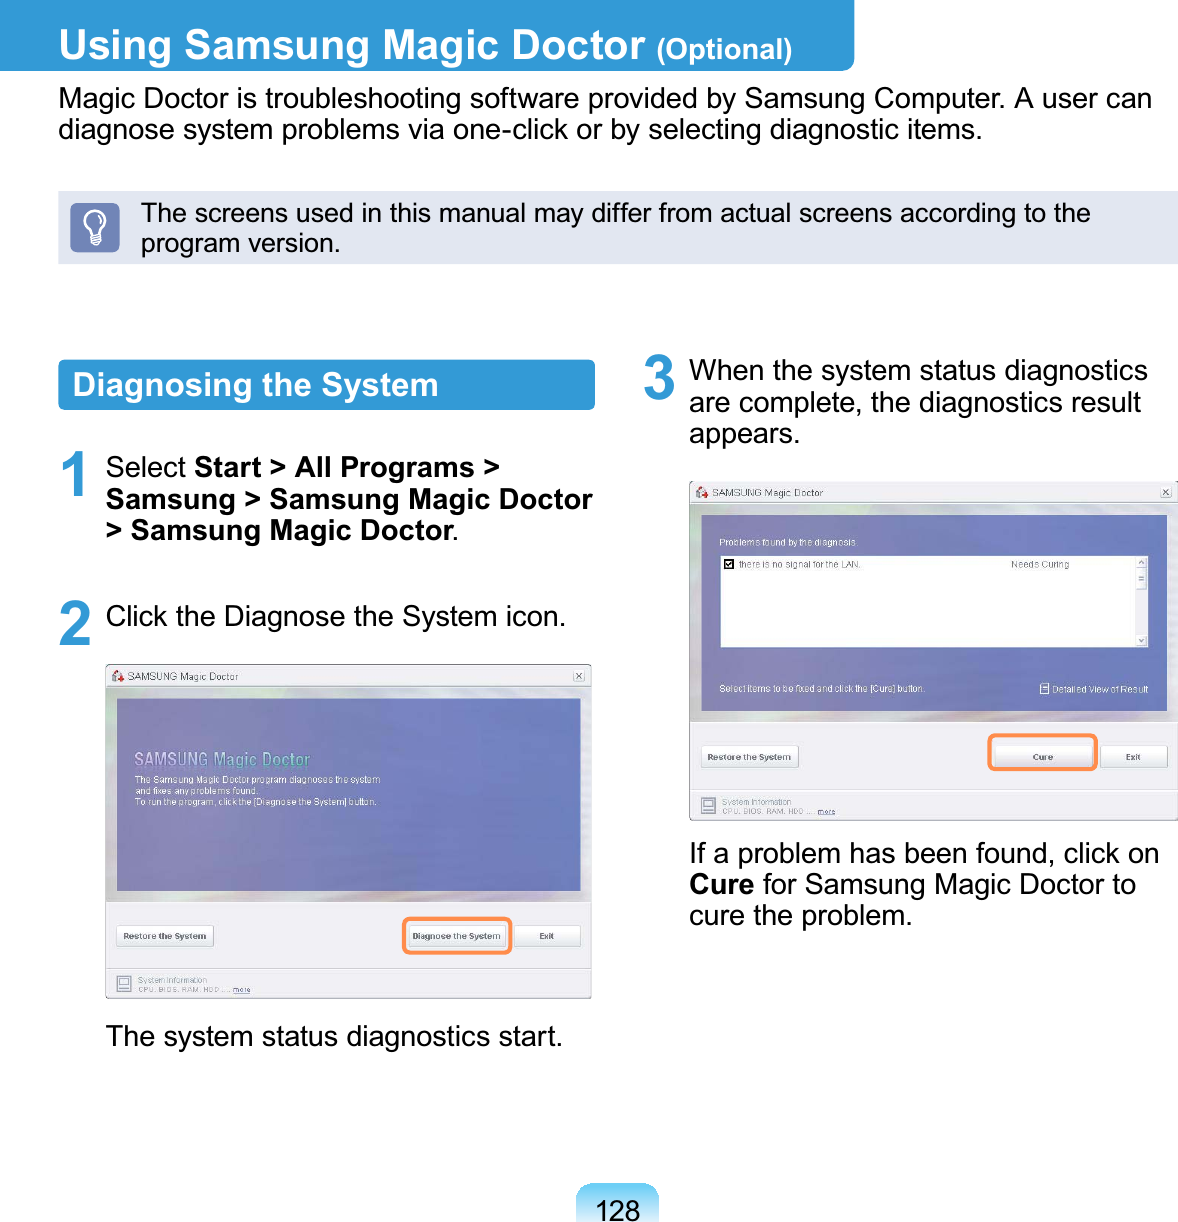 128Using Samsung Magic Doctor (Optional)0DJLF&apos;RFWRULVWURXEOHVKRRWLQJVRIWZDUHSURYLGHGE\6DPVXQJ&amp;RPSXWHU$XVHUFDQGLDJQRVHV\VWHPSUREOHPVYLDRQHFOLFNRUE\VHOHFWLQJGLDJQRVWLFLWHPVThescreensusedinthismanualmaydifferfromactualscreensaccordingtotheSURJUDPYHUVLRQDiagnosing the System1 Select Start &gt; All Programs &gt; Samsung &gt; Samsung Magic Doctor &gt; Samsung Magic Doctor2 &amp;OLFNWKH&apos;LDJQRVHWKH6\VWHPLFRQ7KHV\VWHPVWDWXVGLDJQRVWLFVVWDUW3 When the system status diagnosticsare complete, the diagnostics resultDSSHDUVIf a problem has been found, click onCure for Samsung Magic Doctor toFXUHWKHSUREOHP